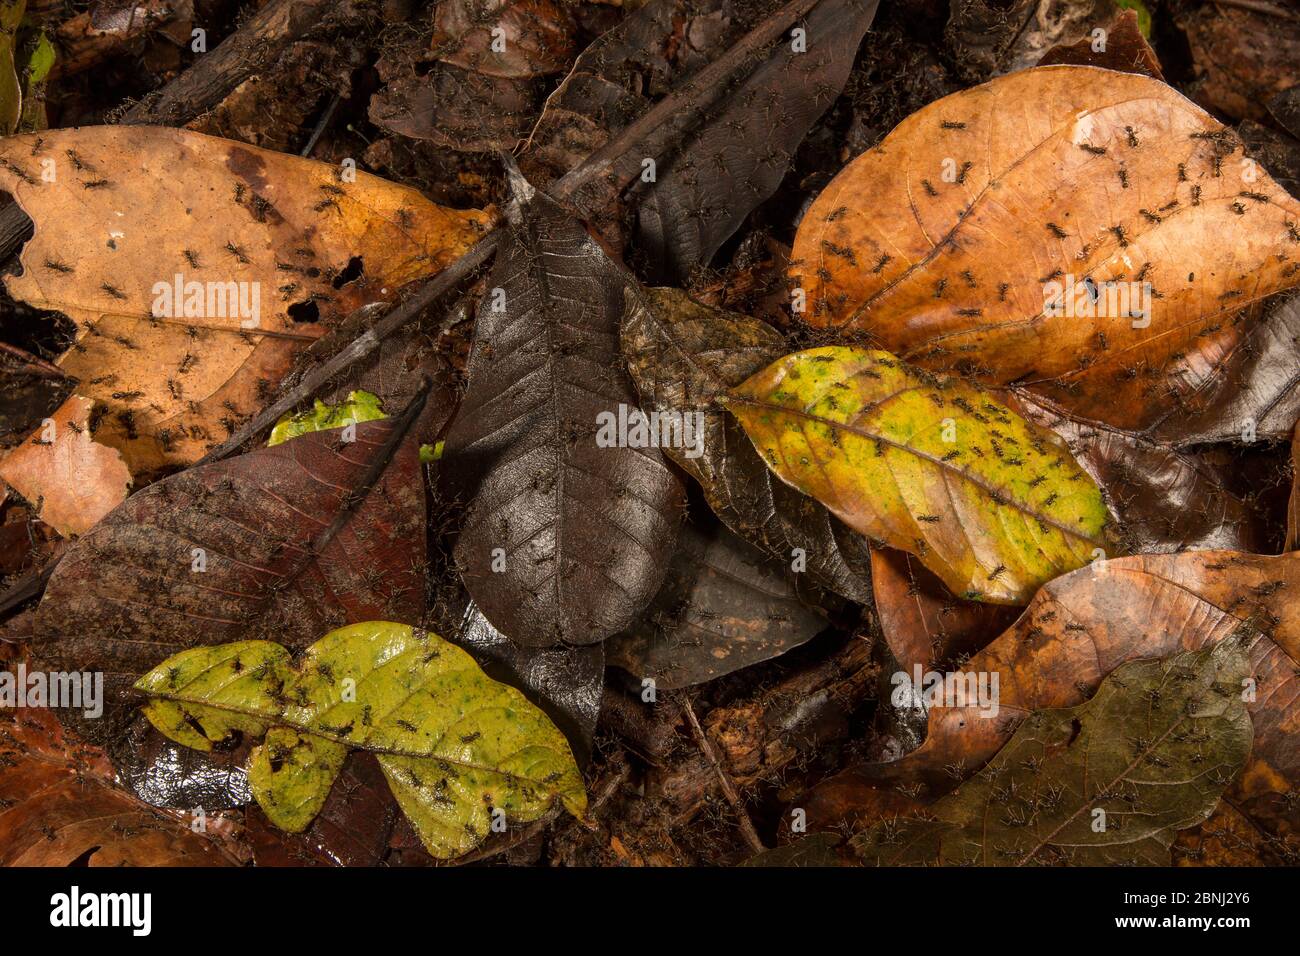 Army ants, Barro Colorado Island, Gatun Lake, Panama Canal, Panama. Stock Photo